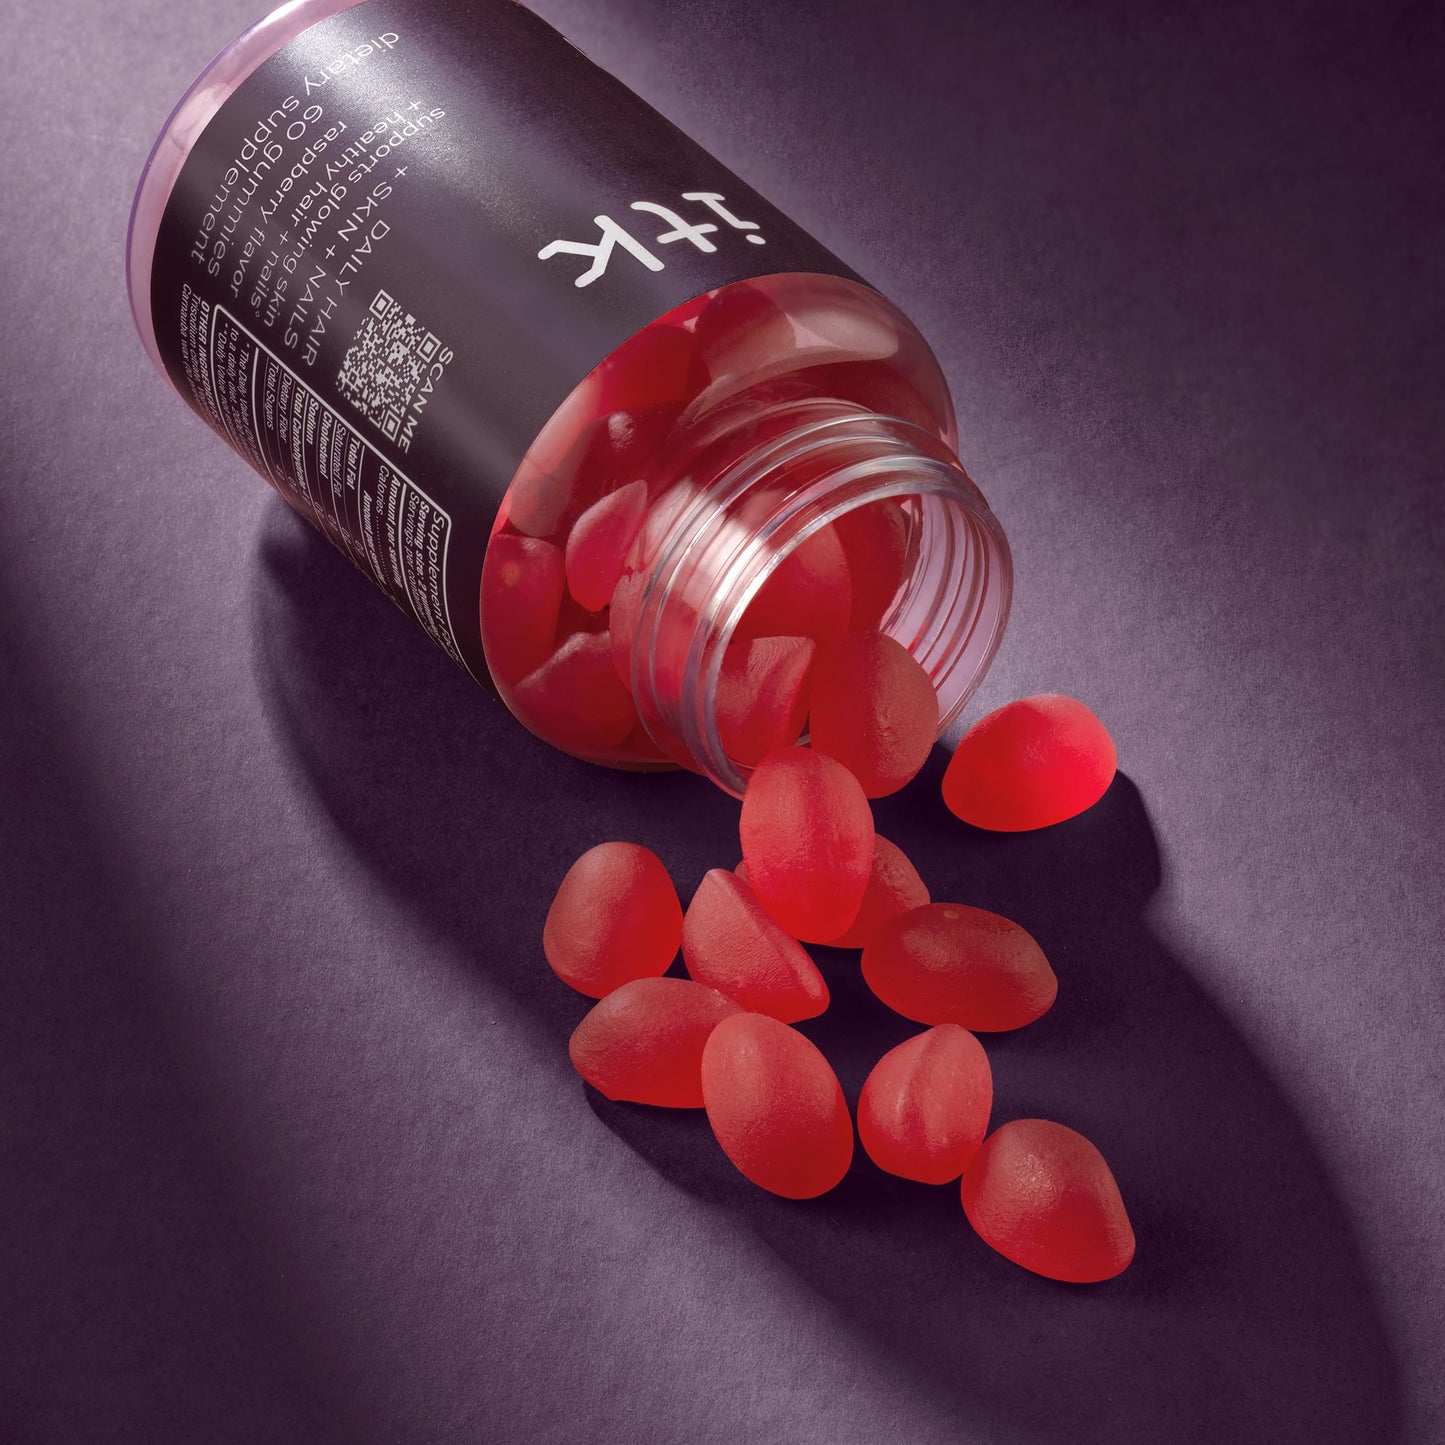 ITK Daily Hair + Skin + Nails Supplement Gummies with Biotin | Raspberry | 30-Day Supply, 60 Ct